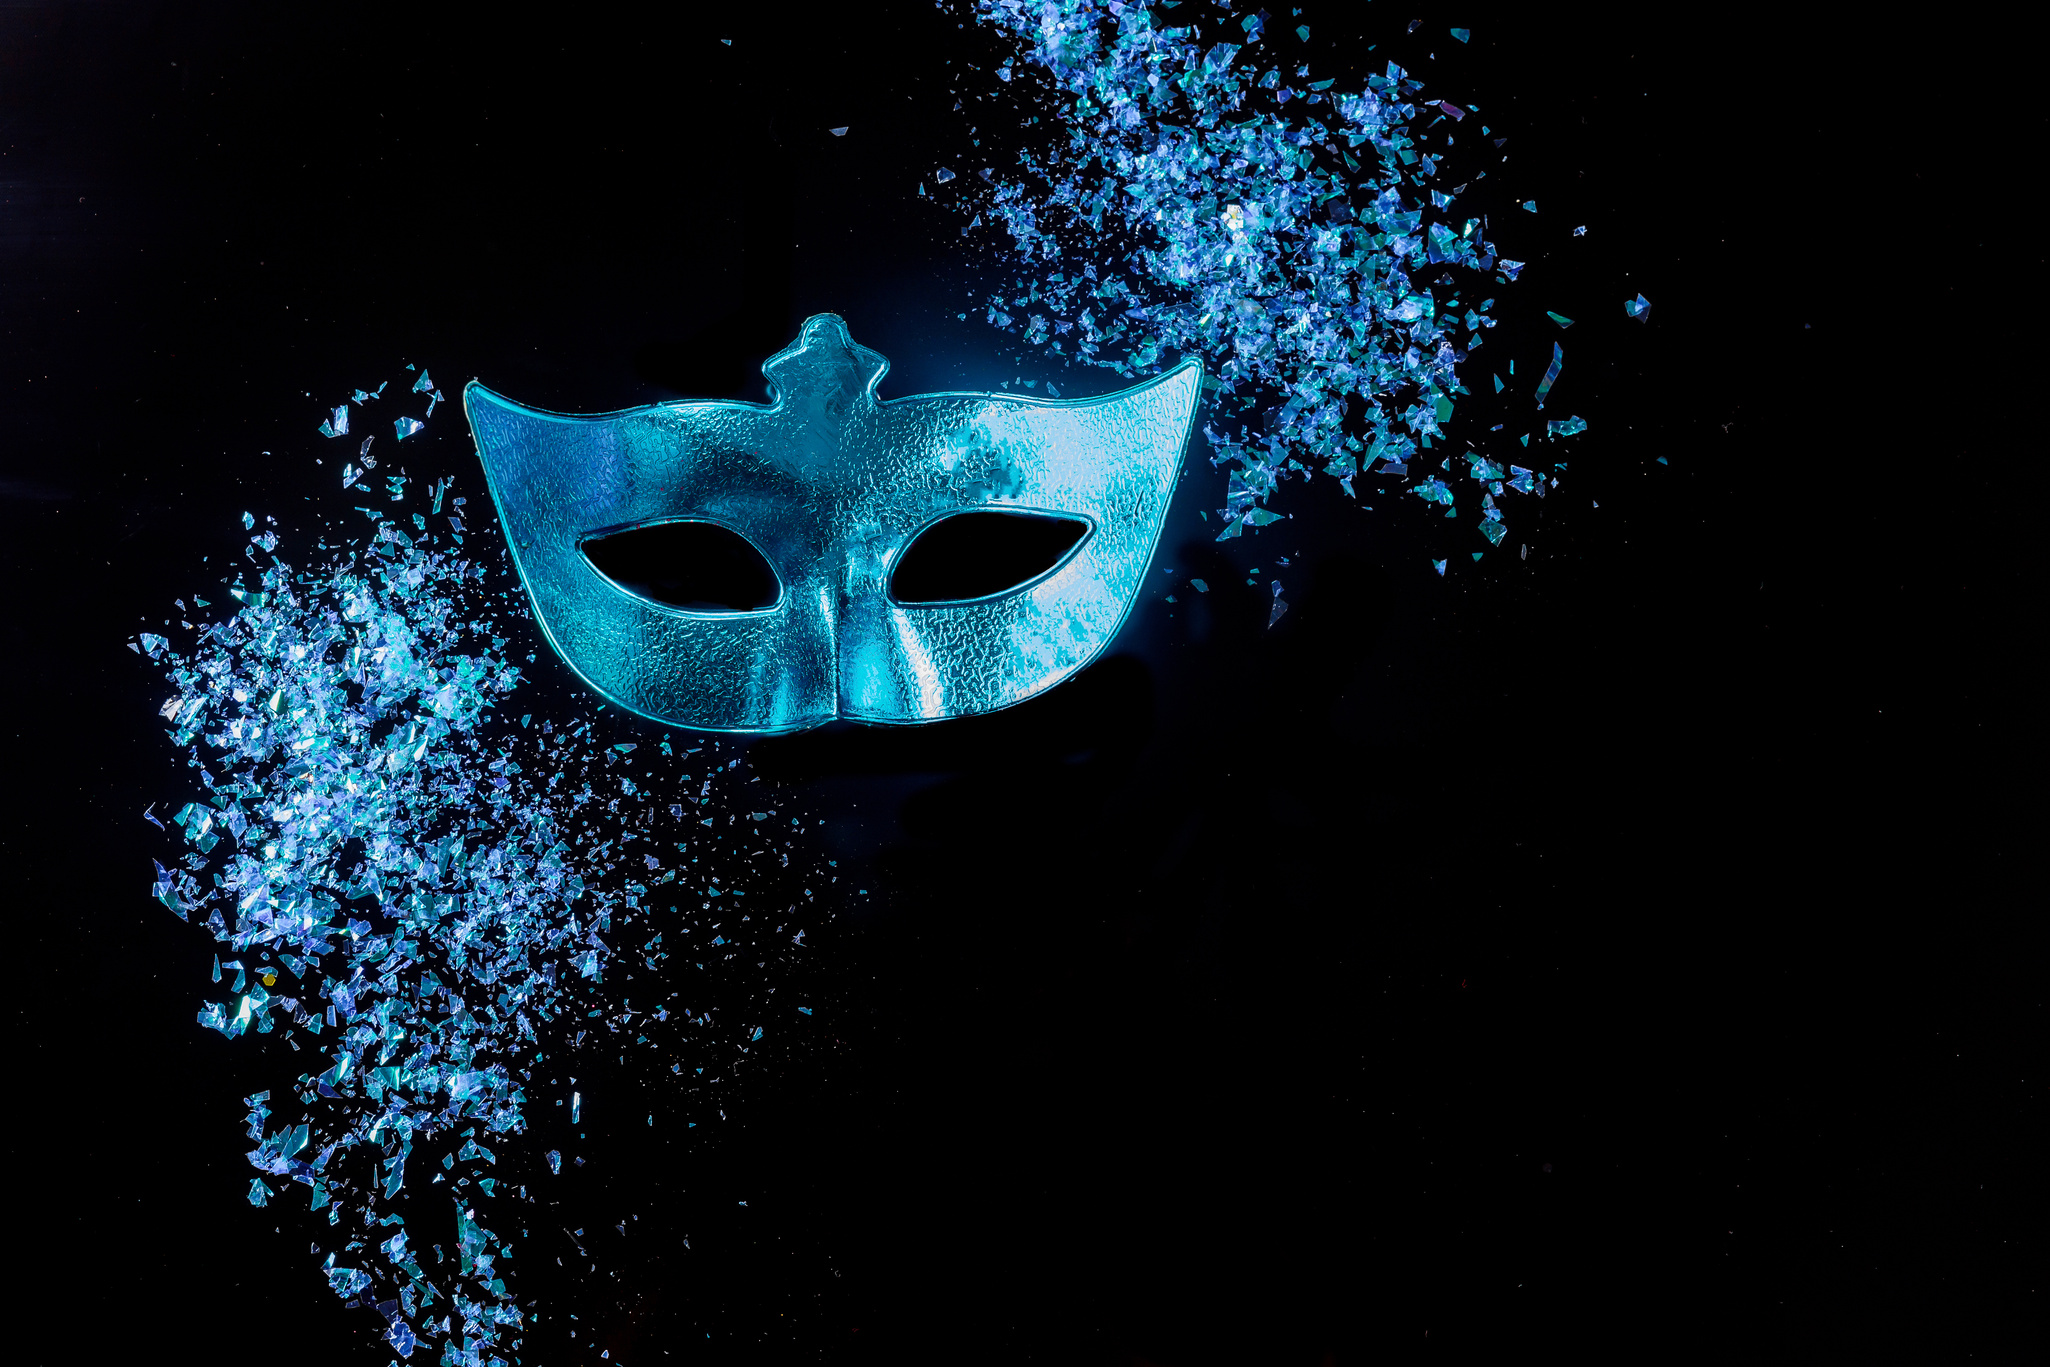 Blue carnival mask for masquerade. Jewish holiday.